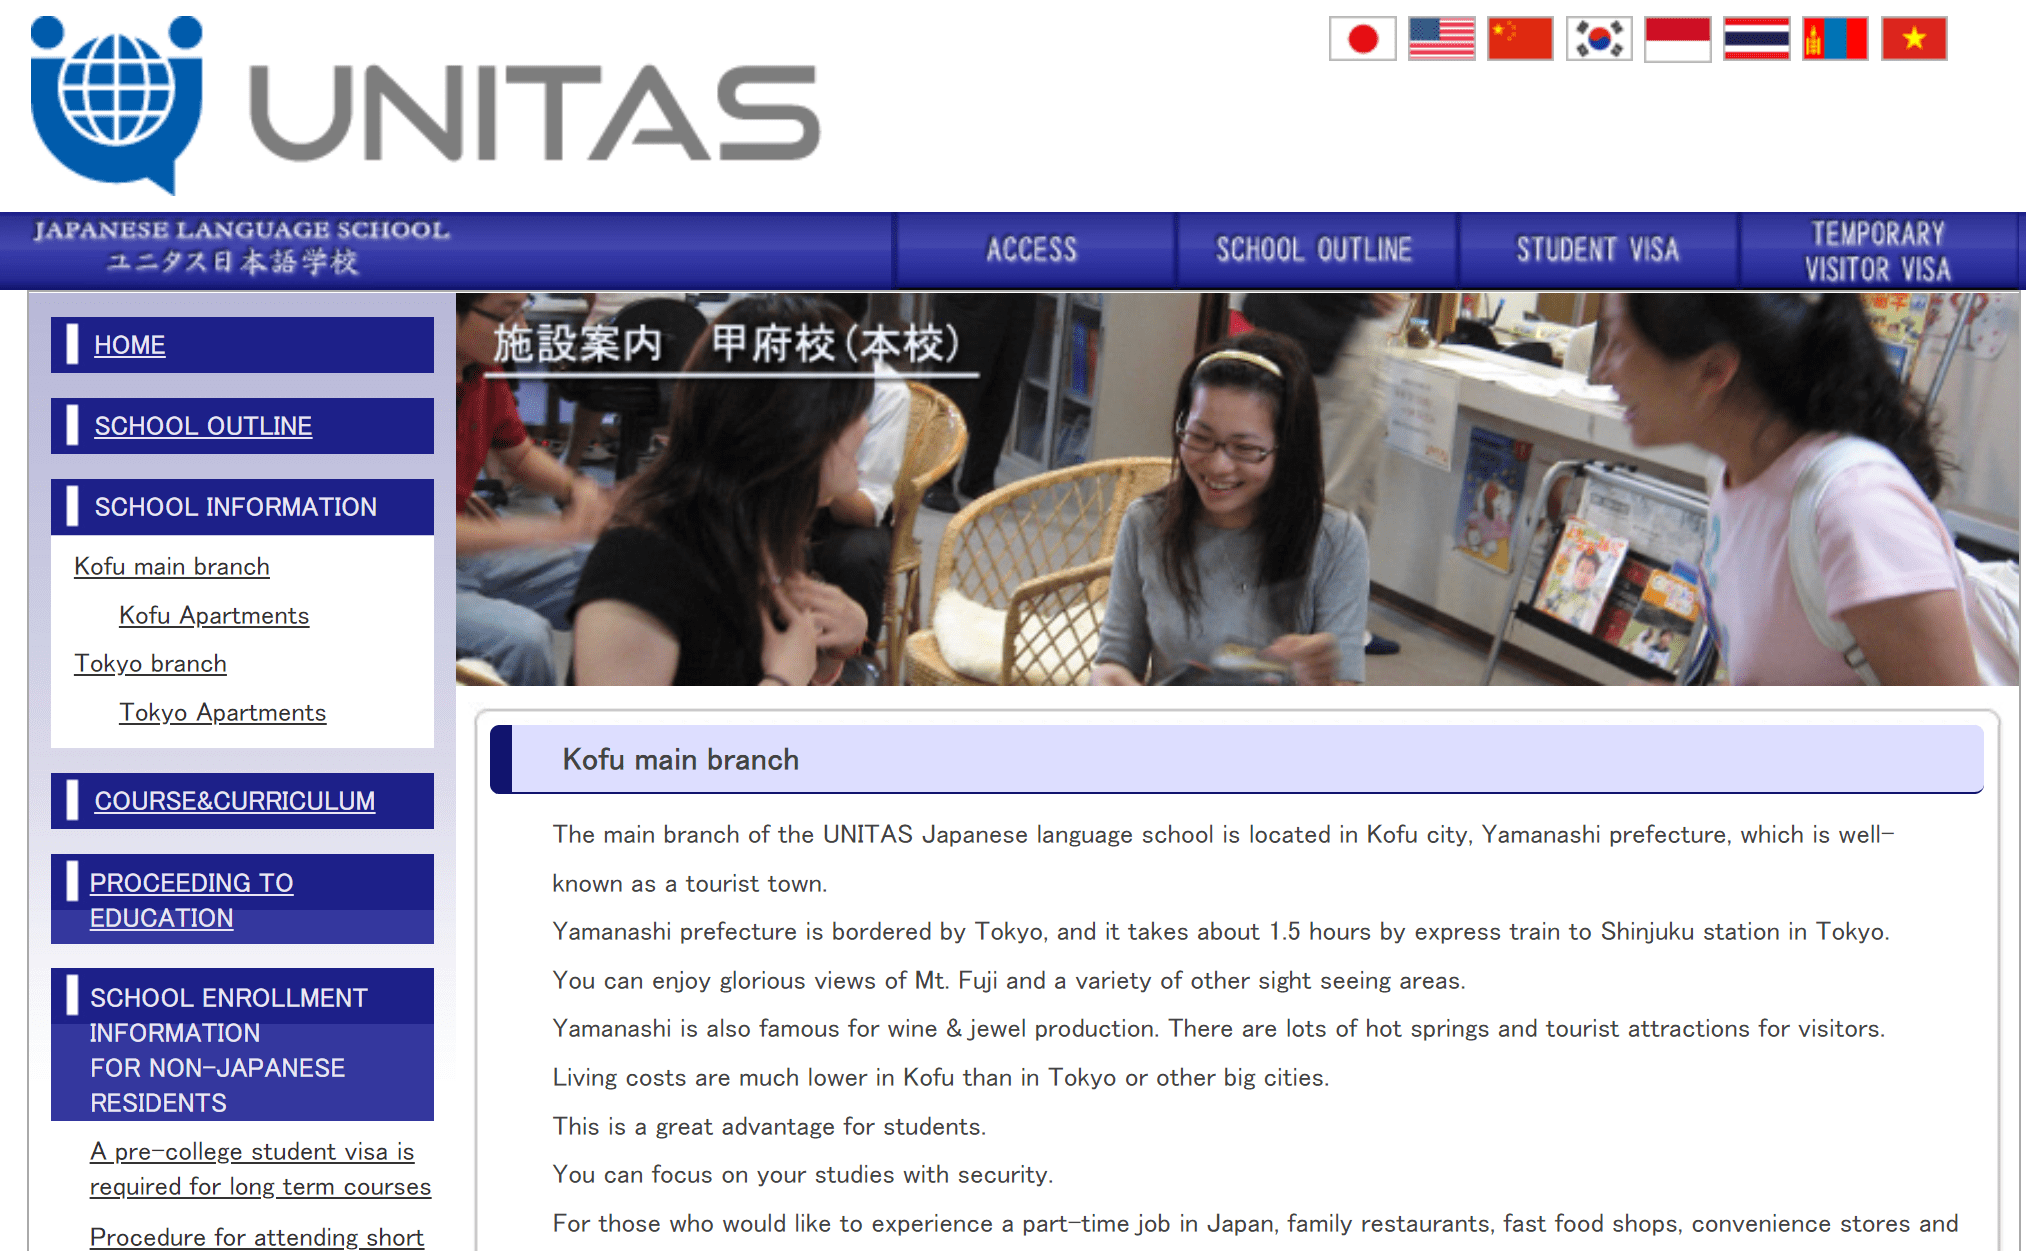 UNITAS Japanese Language School website